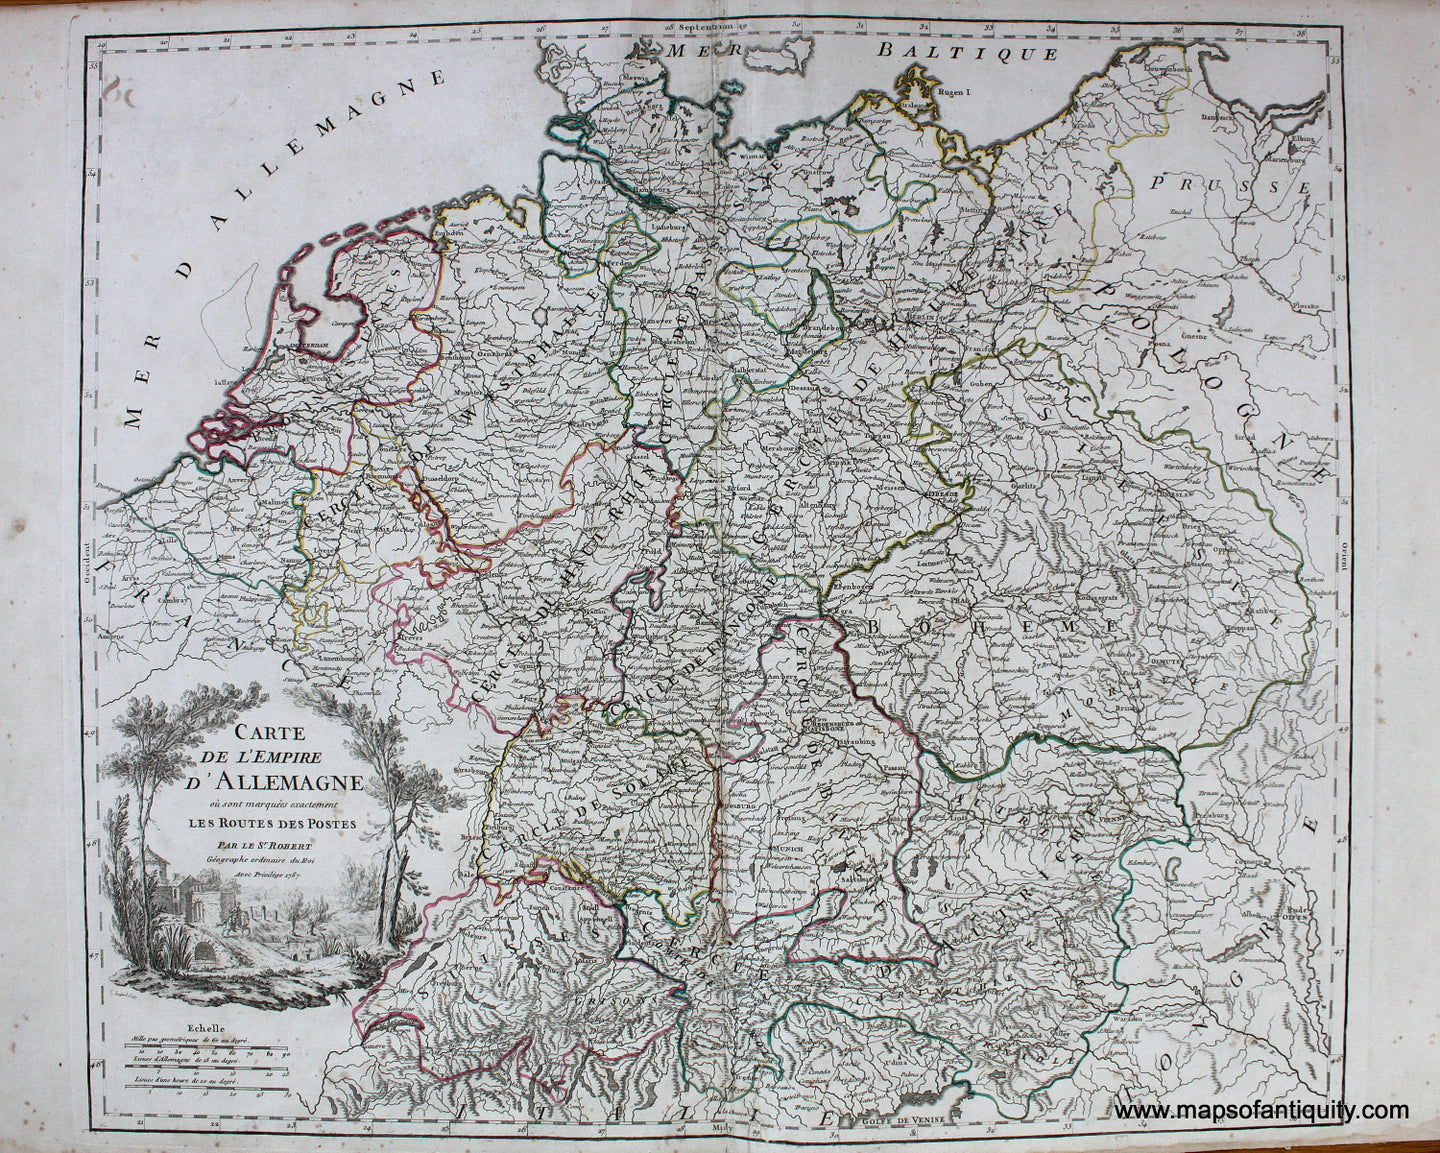 Antique-Hand-Colored-Map-Carte-de-L'Empire-D'Allemagne-Germany-Europe-Germany-1757-Vaugondy-Maps-Of-Antiquity